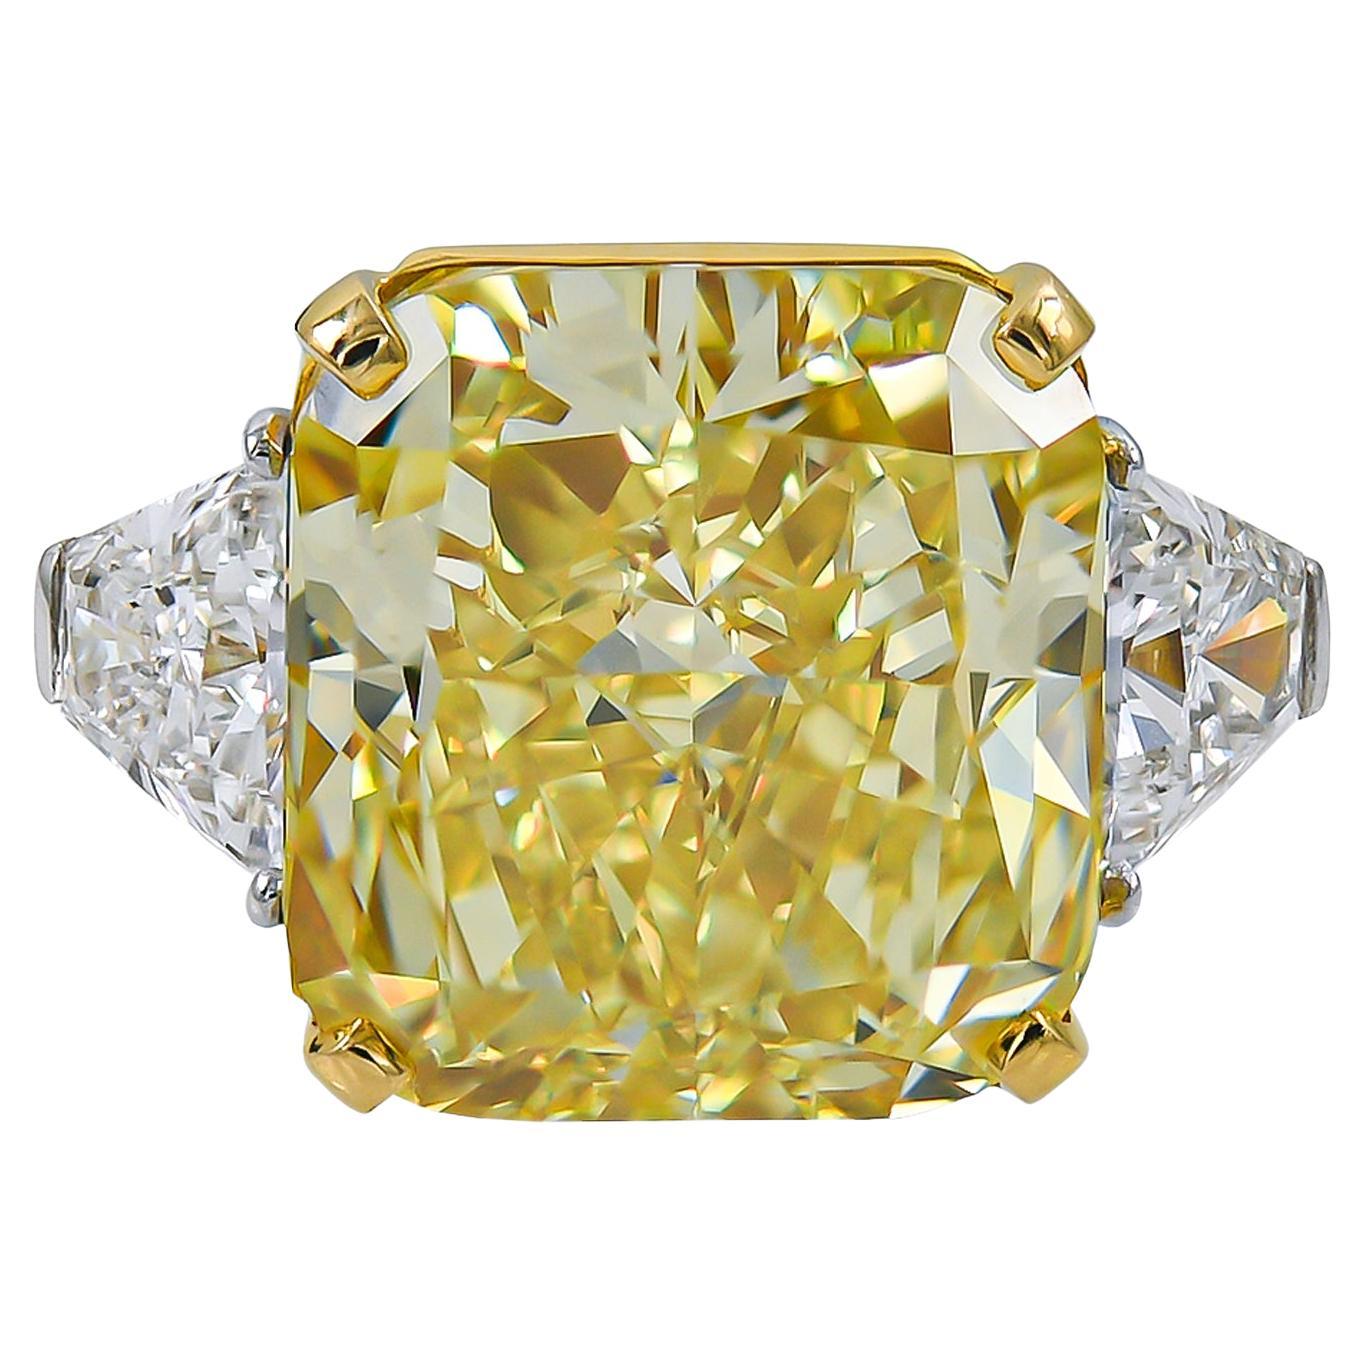 Spectra Fine Jewelry Bague en diamant jaune vif fantaisie de 22,86 carats certifi GIA